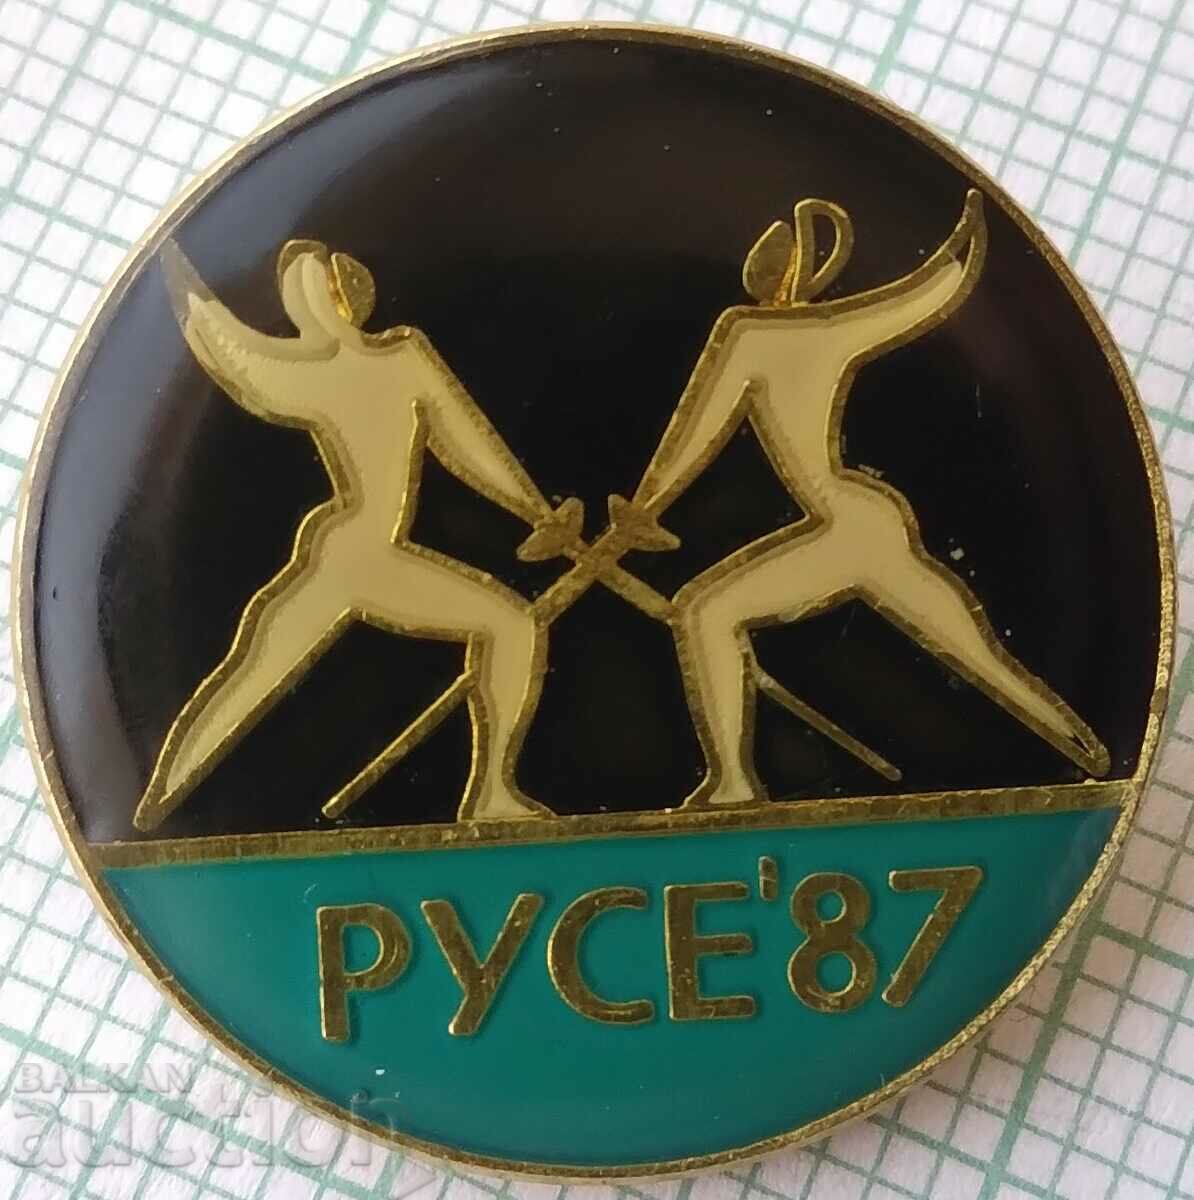 16334 Badge - Men's Fencing Tournament Ruse 1987